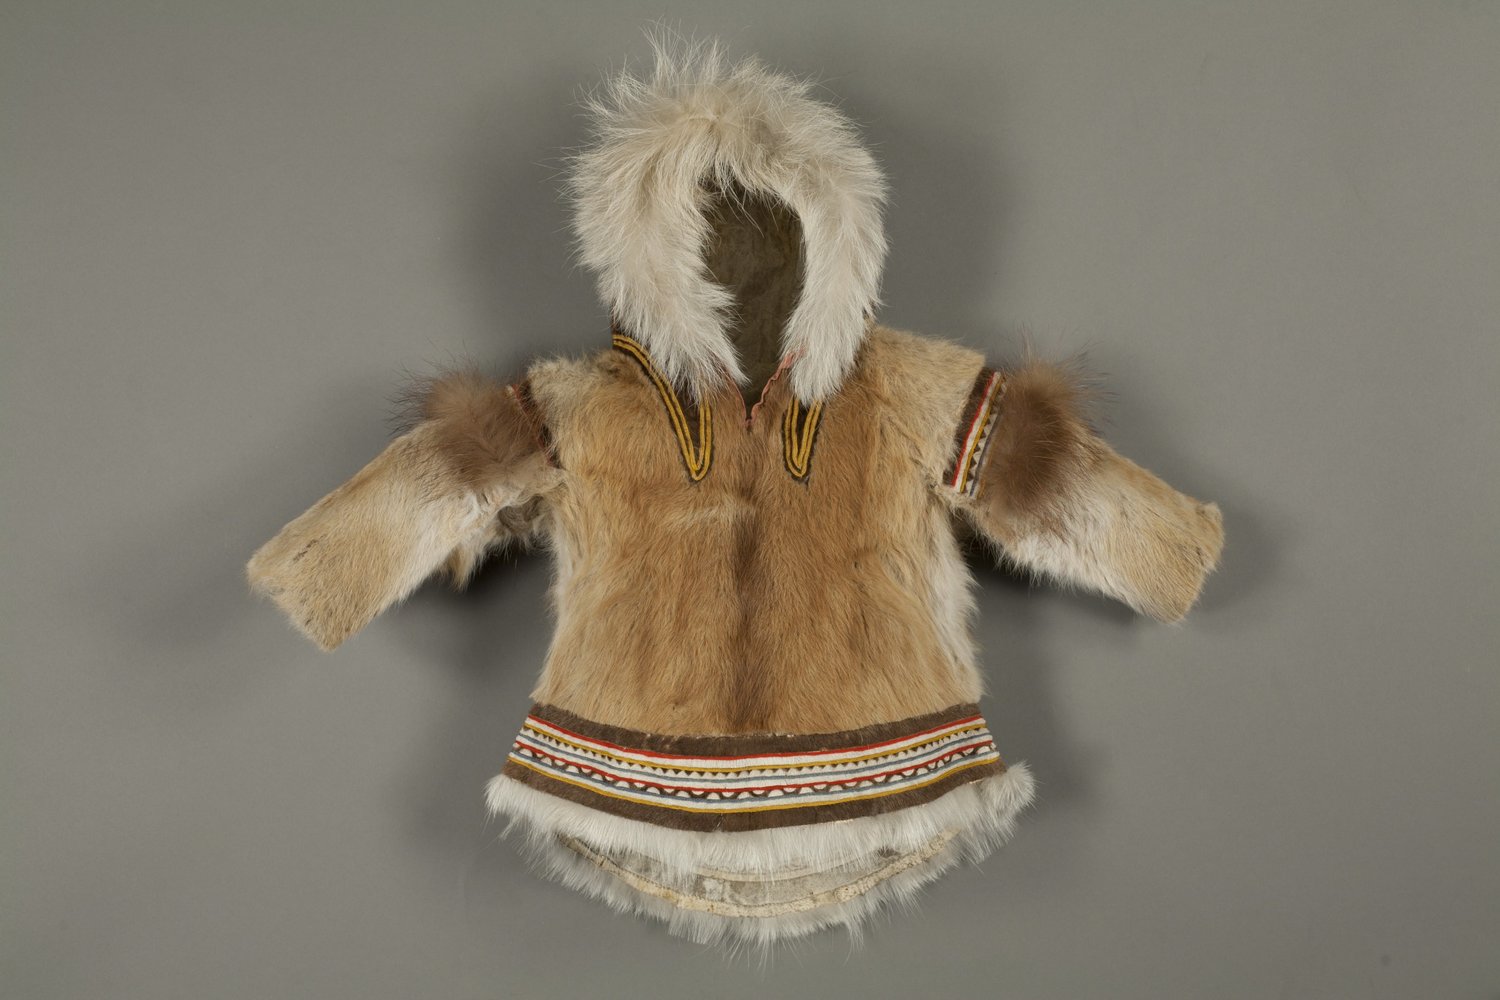 R2-2 Clothing — Native American Art Teacher Resources